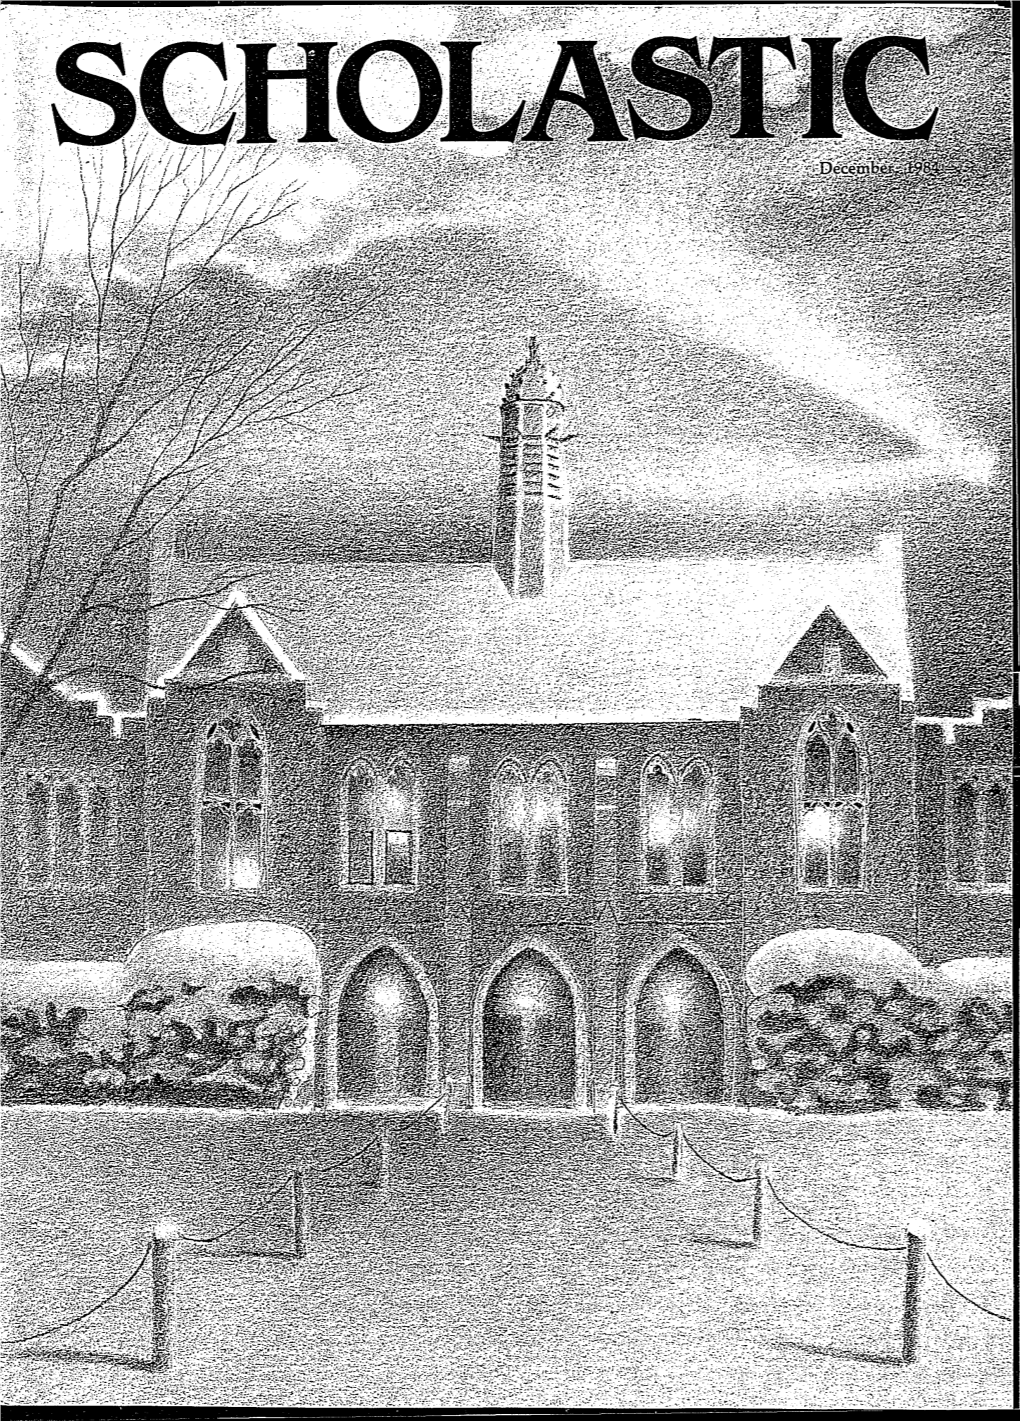 Notre Dame Scholastic, Vol. 126, No. 03 -- December 1984